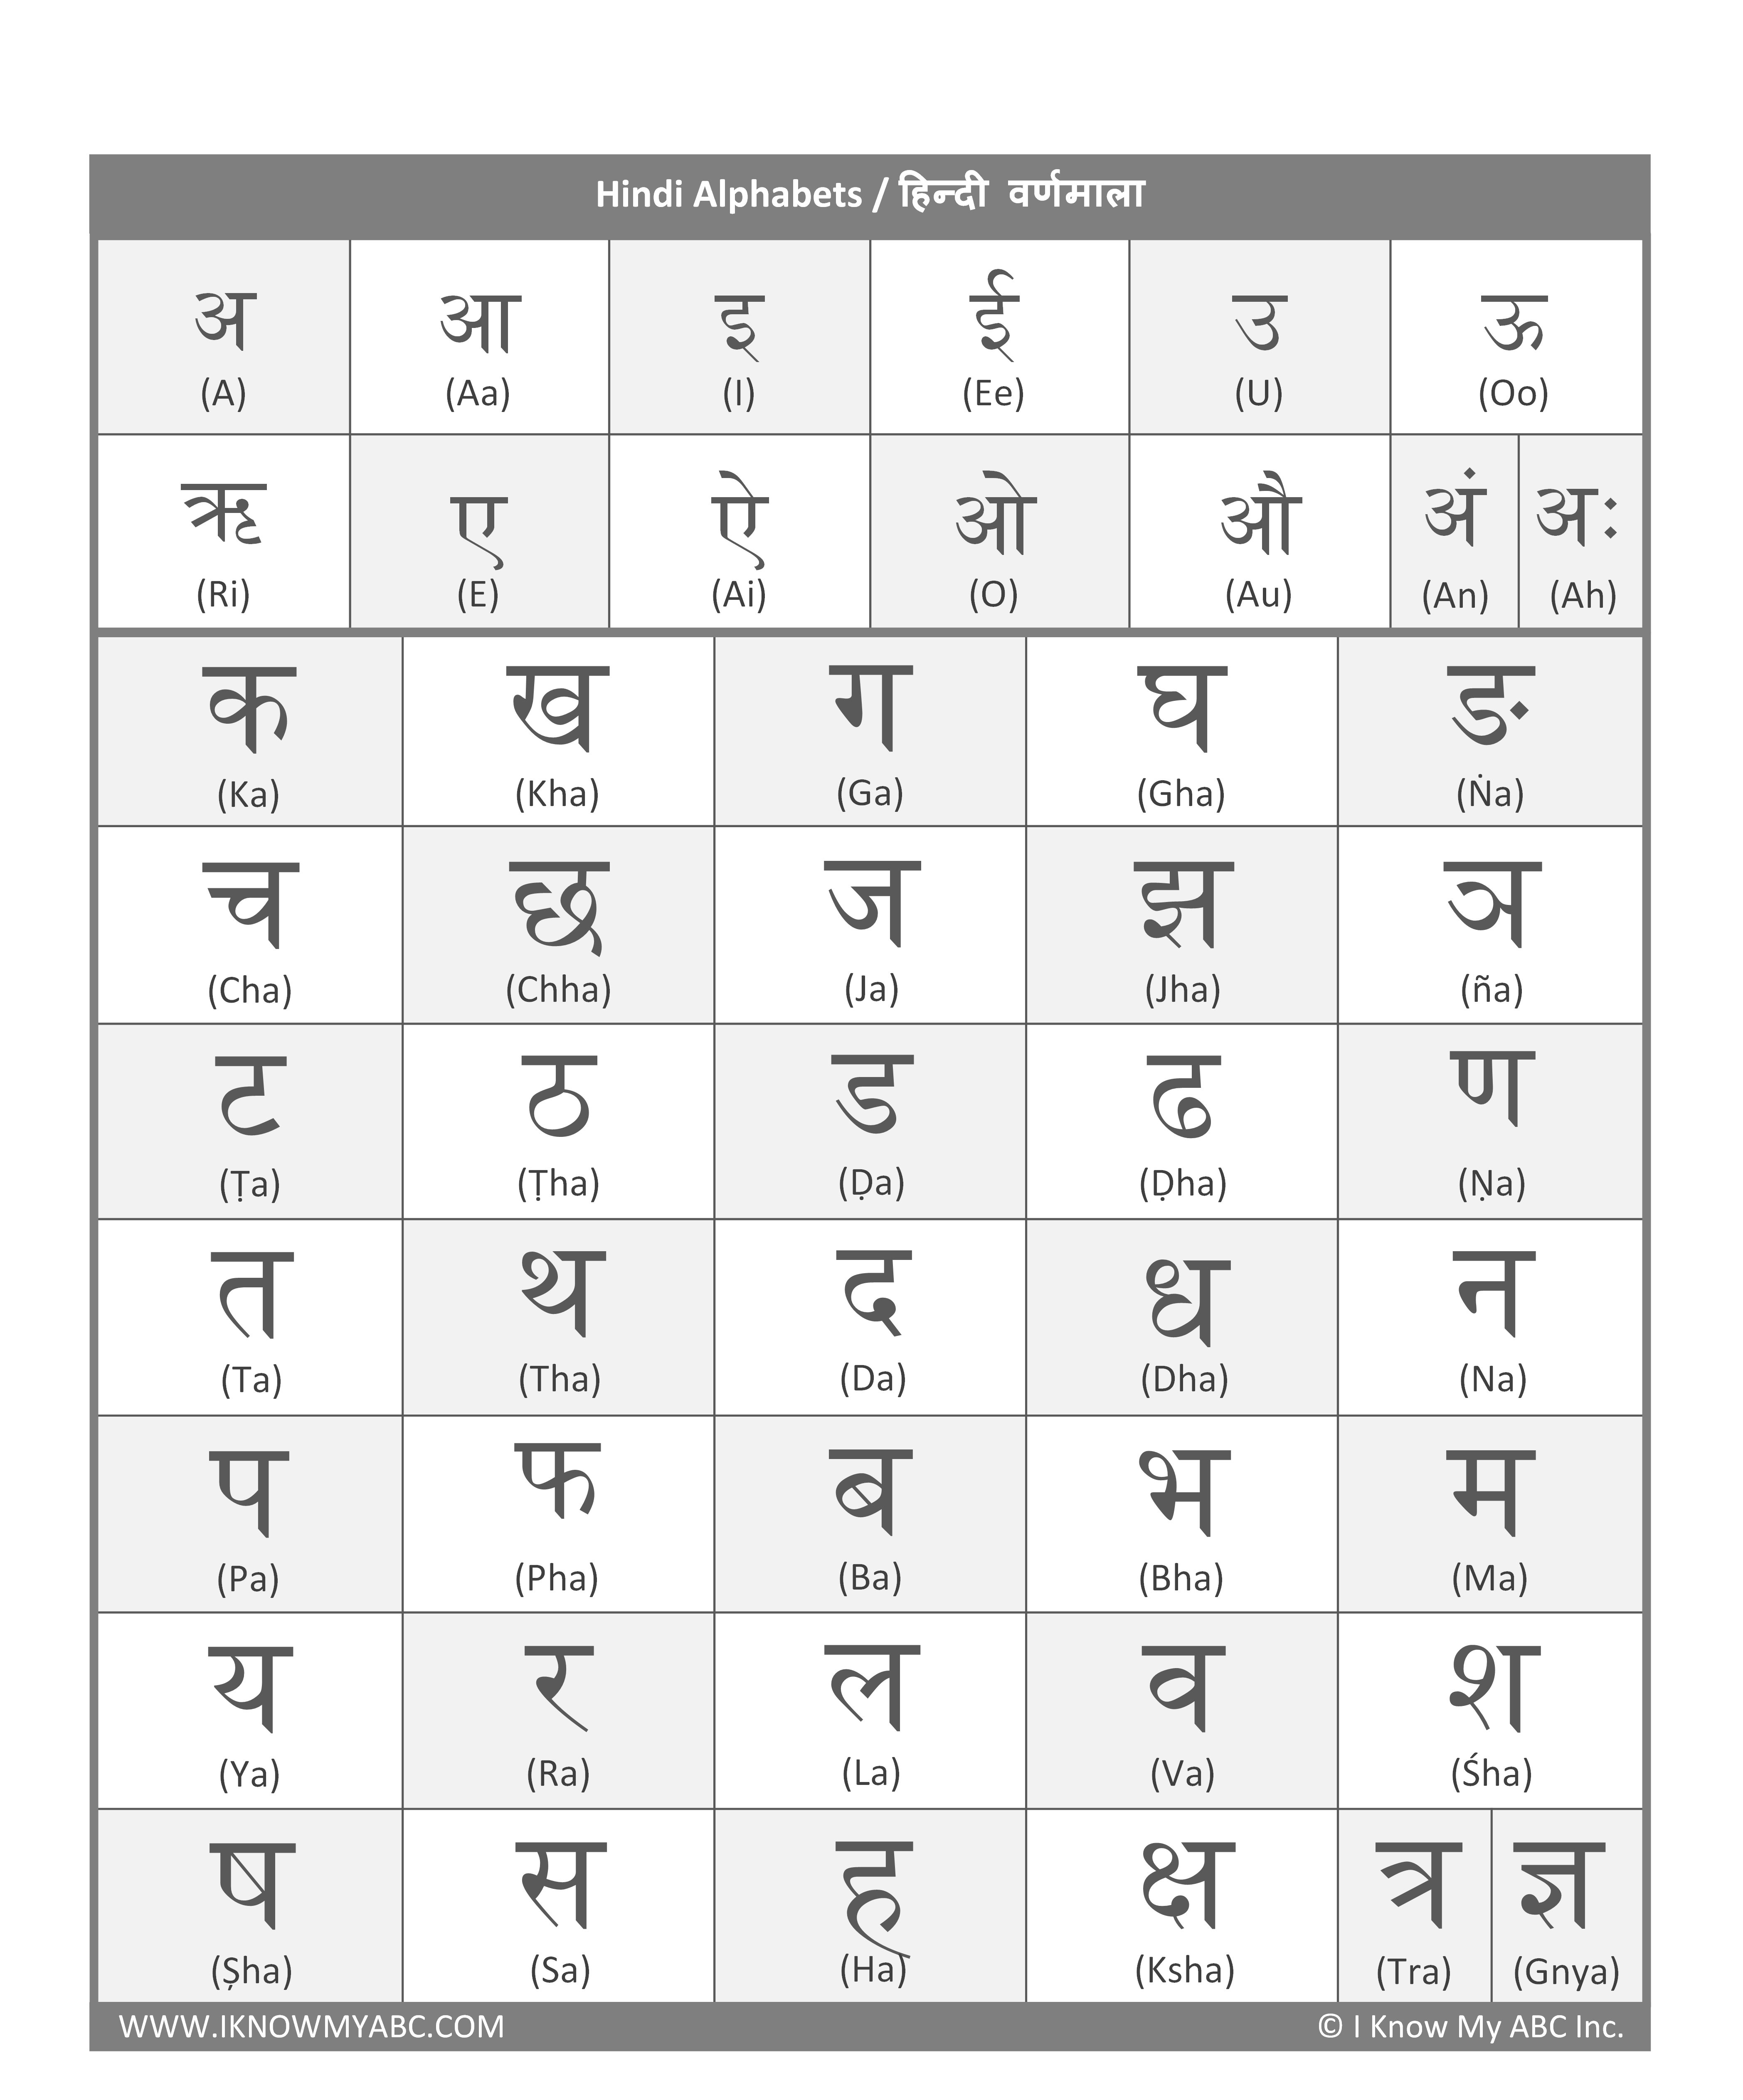 bengali alphabets with hindi alphabets